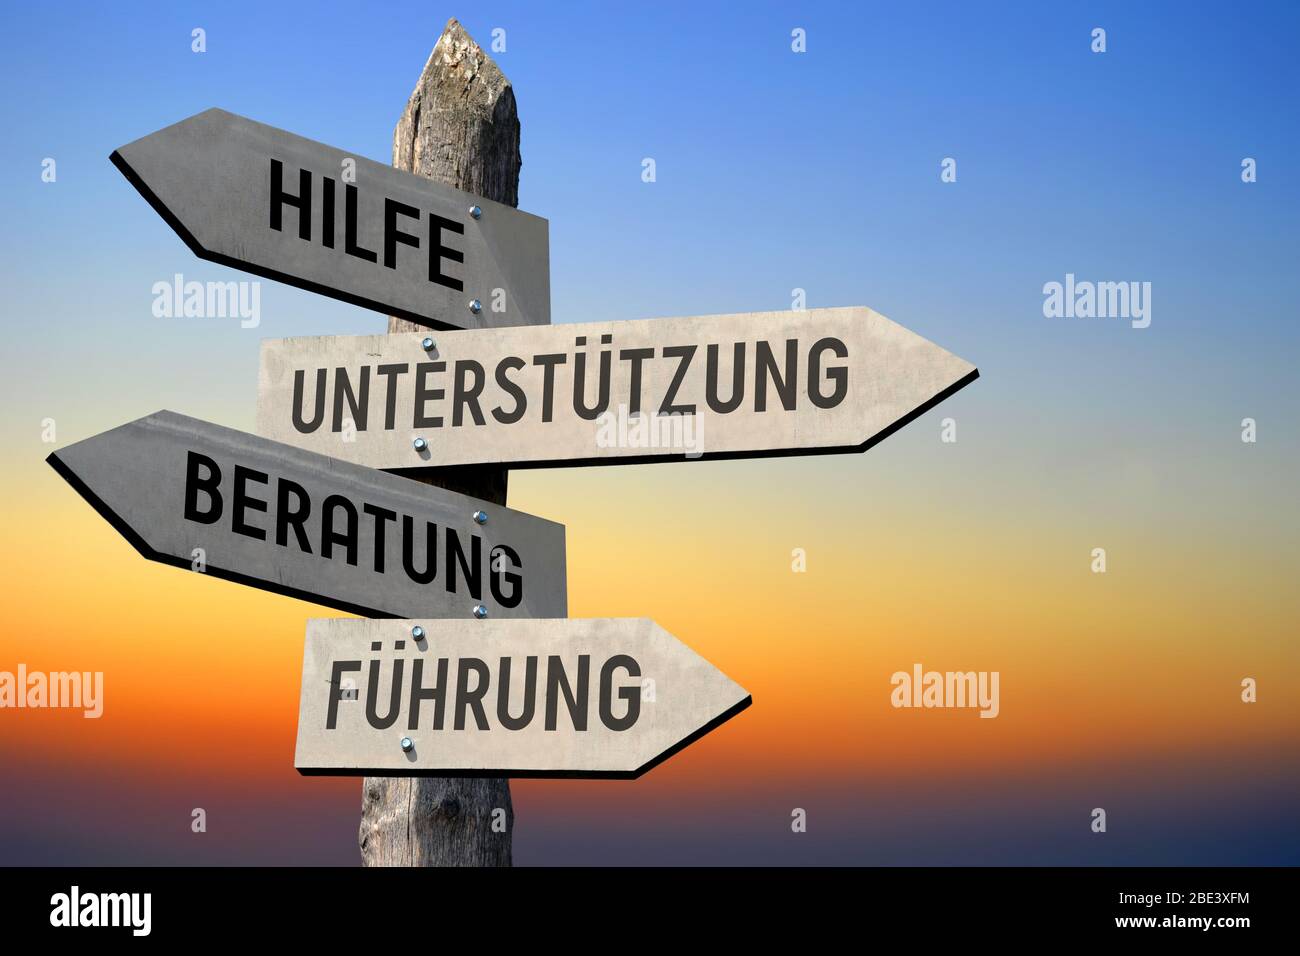 Hilfe, Unterstutzung, Beratung, Fuhrung - signpost allemand Banque D'Images